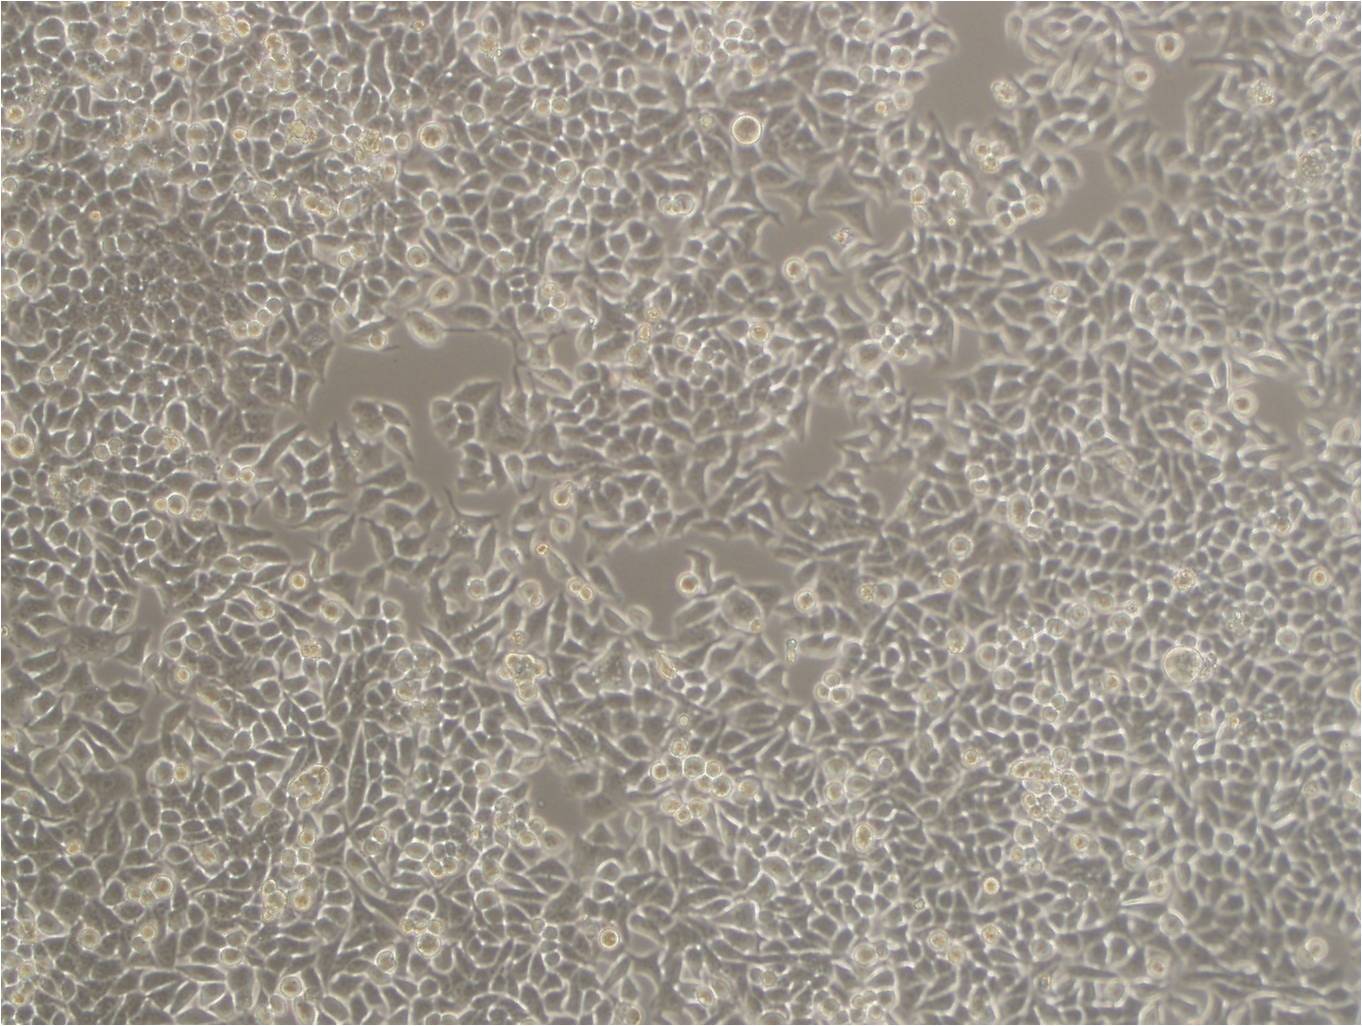 VM-CUB-1 epithelioid cells人膀胱癌细胞系